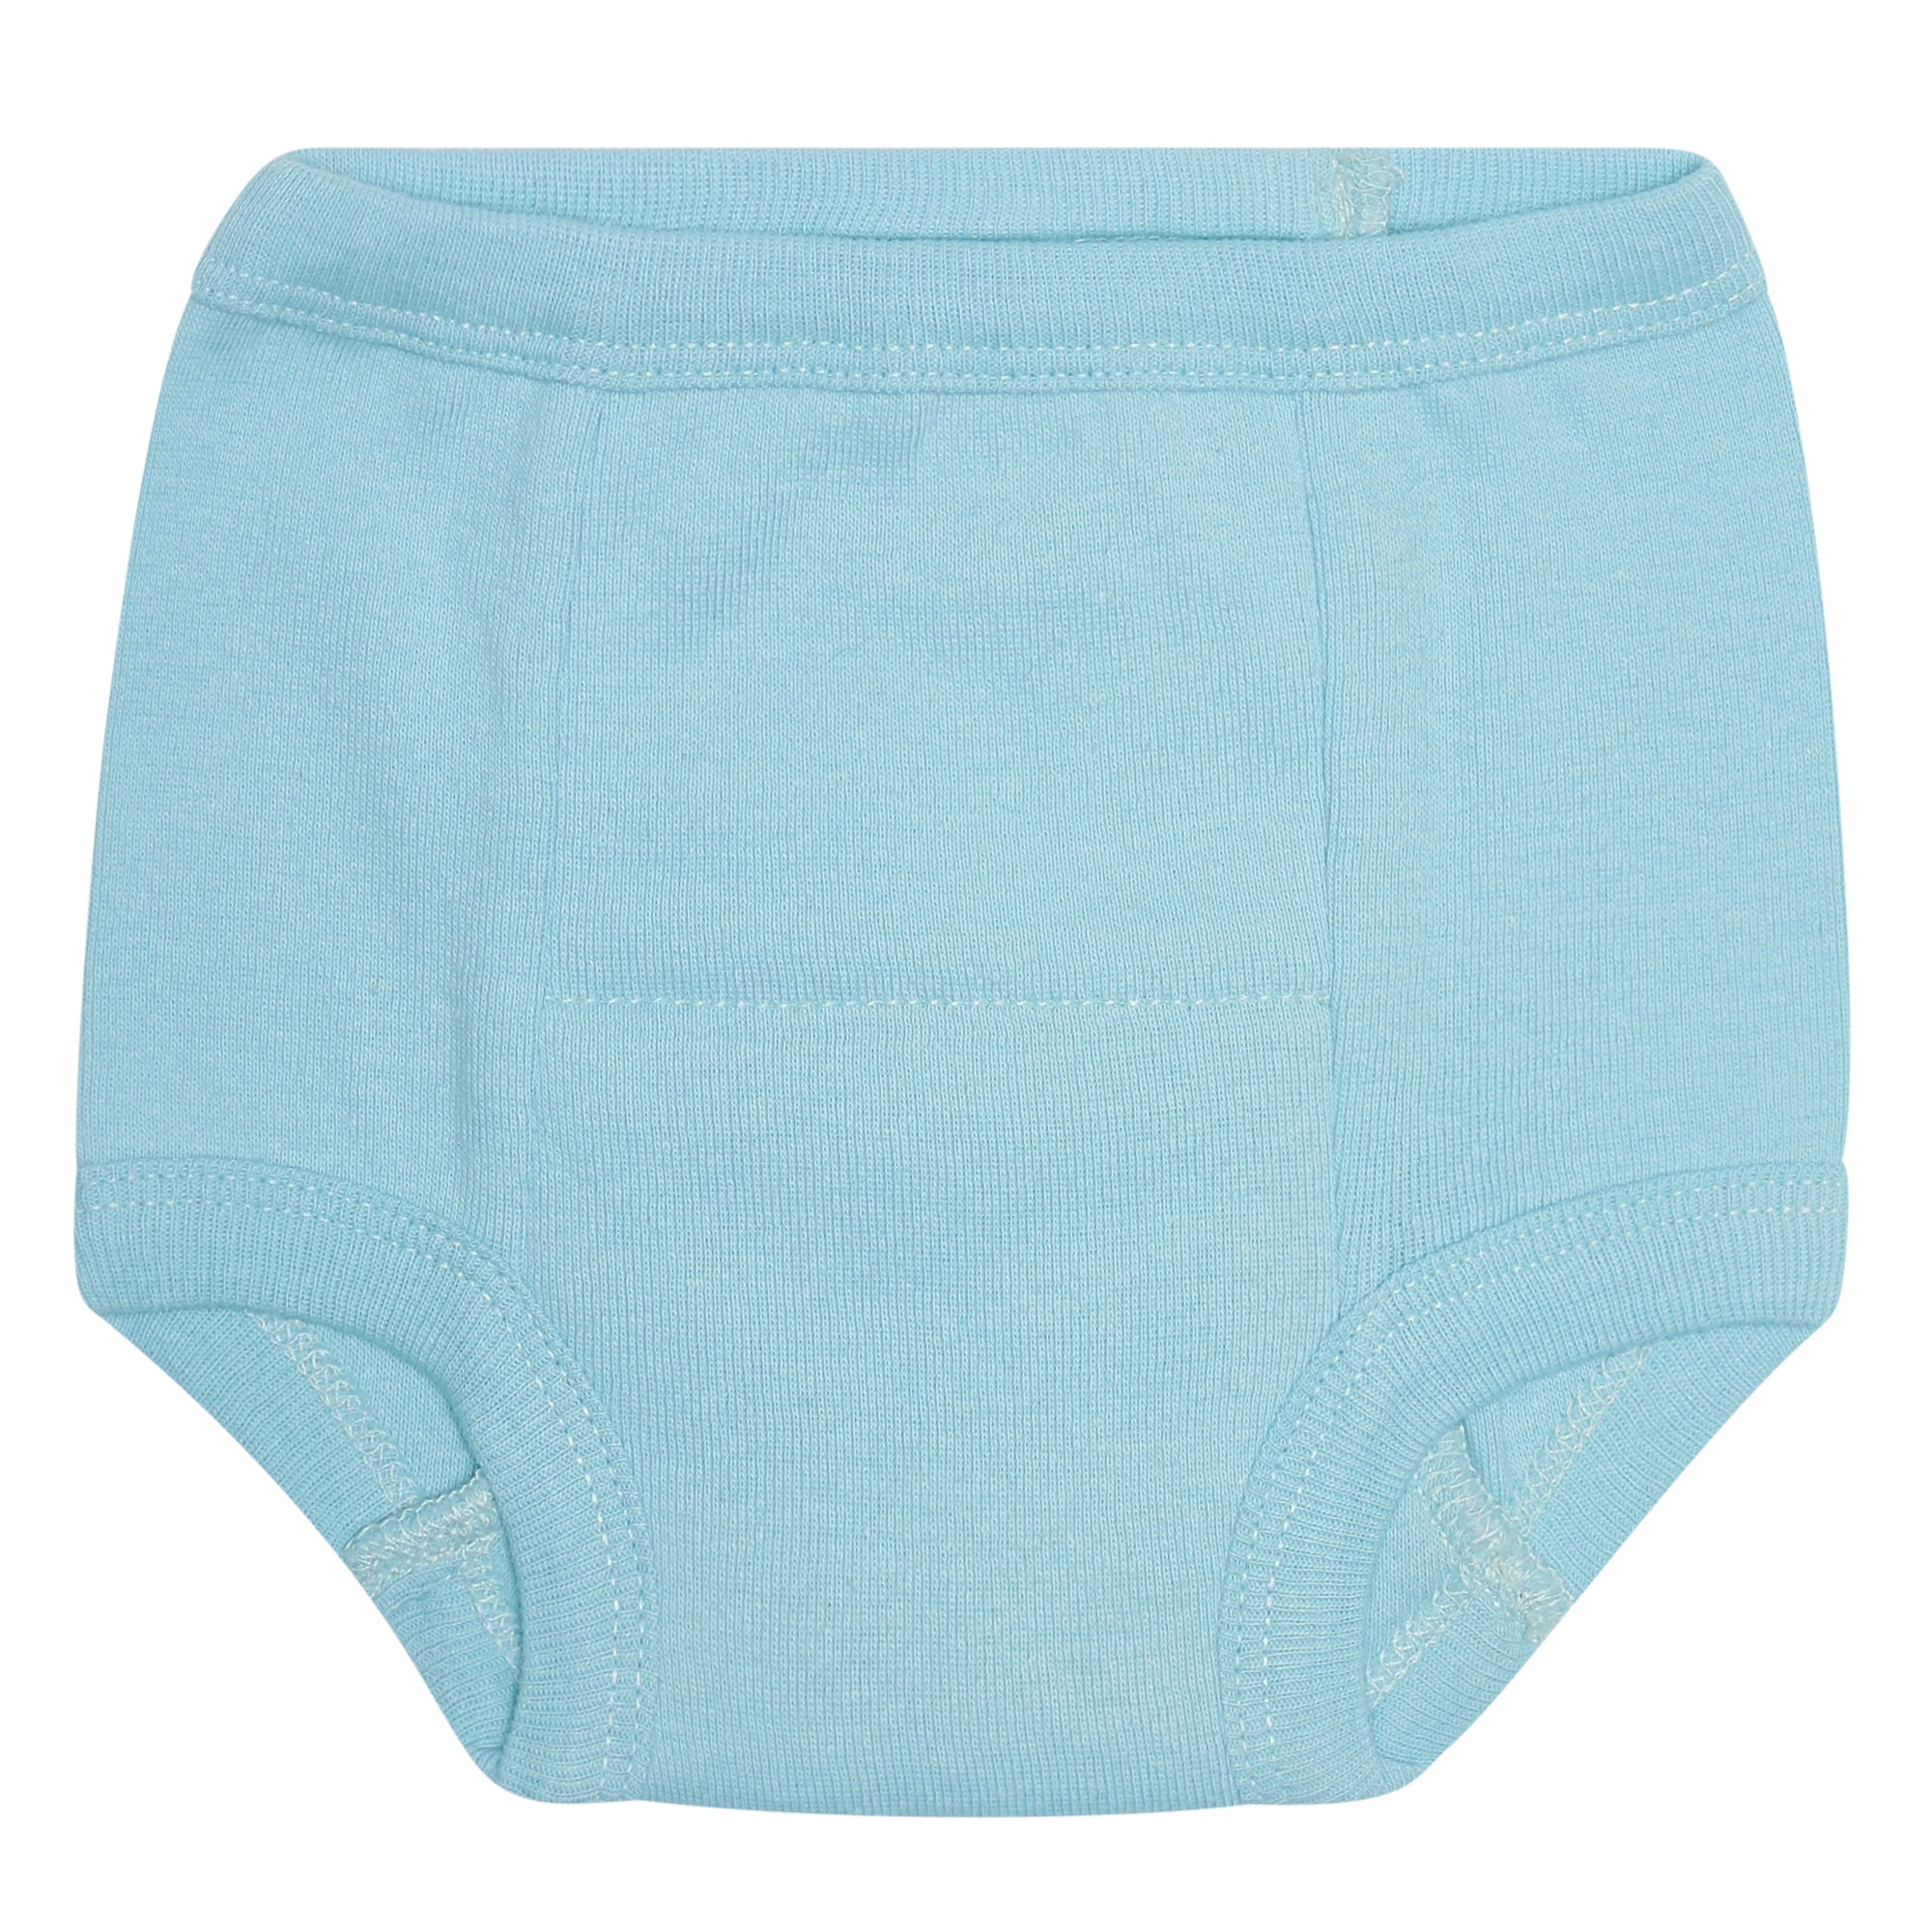 Gerber Toddler Boy Training Pants, 4-Pack (2T - 3T)